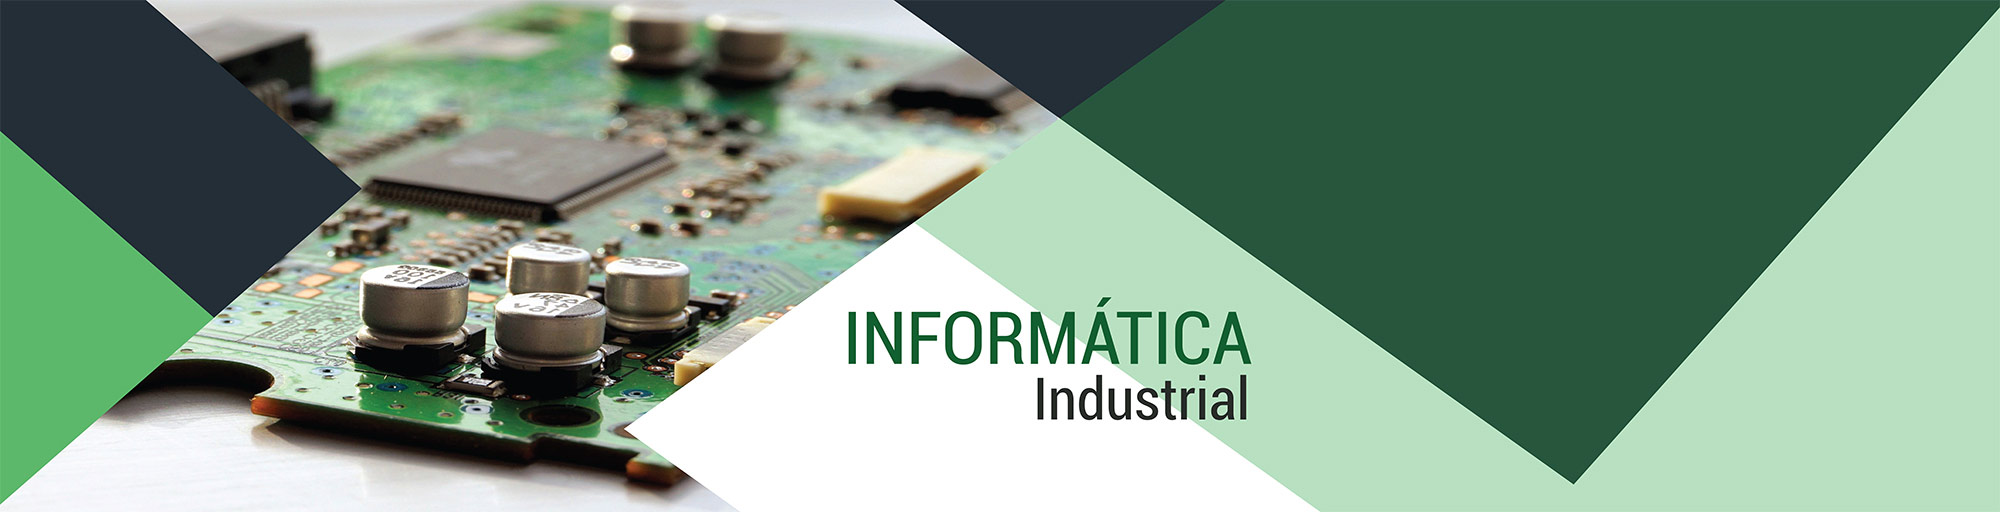 PC industrial: sistemas embebidos, panel PC, monitores industriales, IA, IoT, etc.